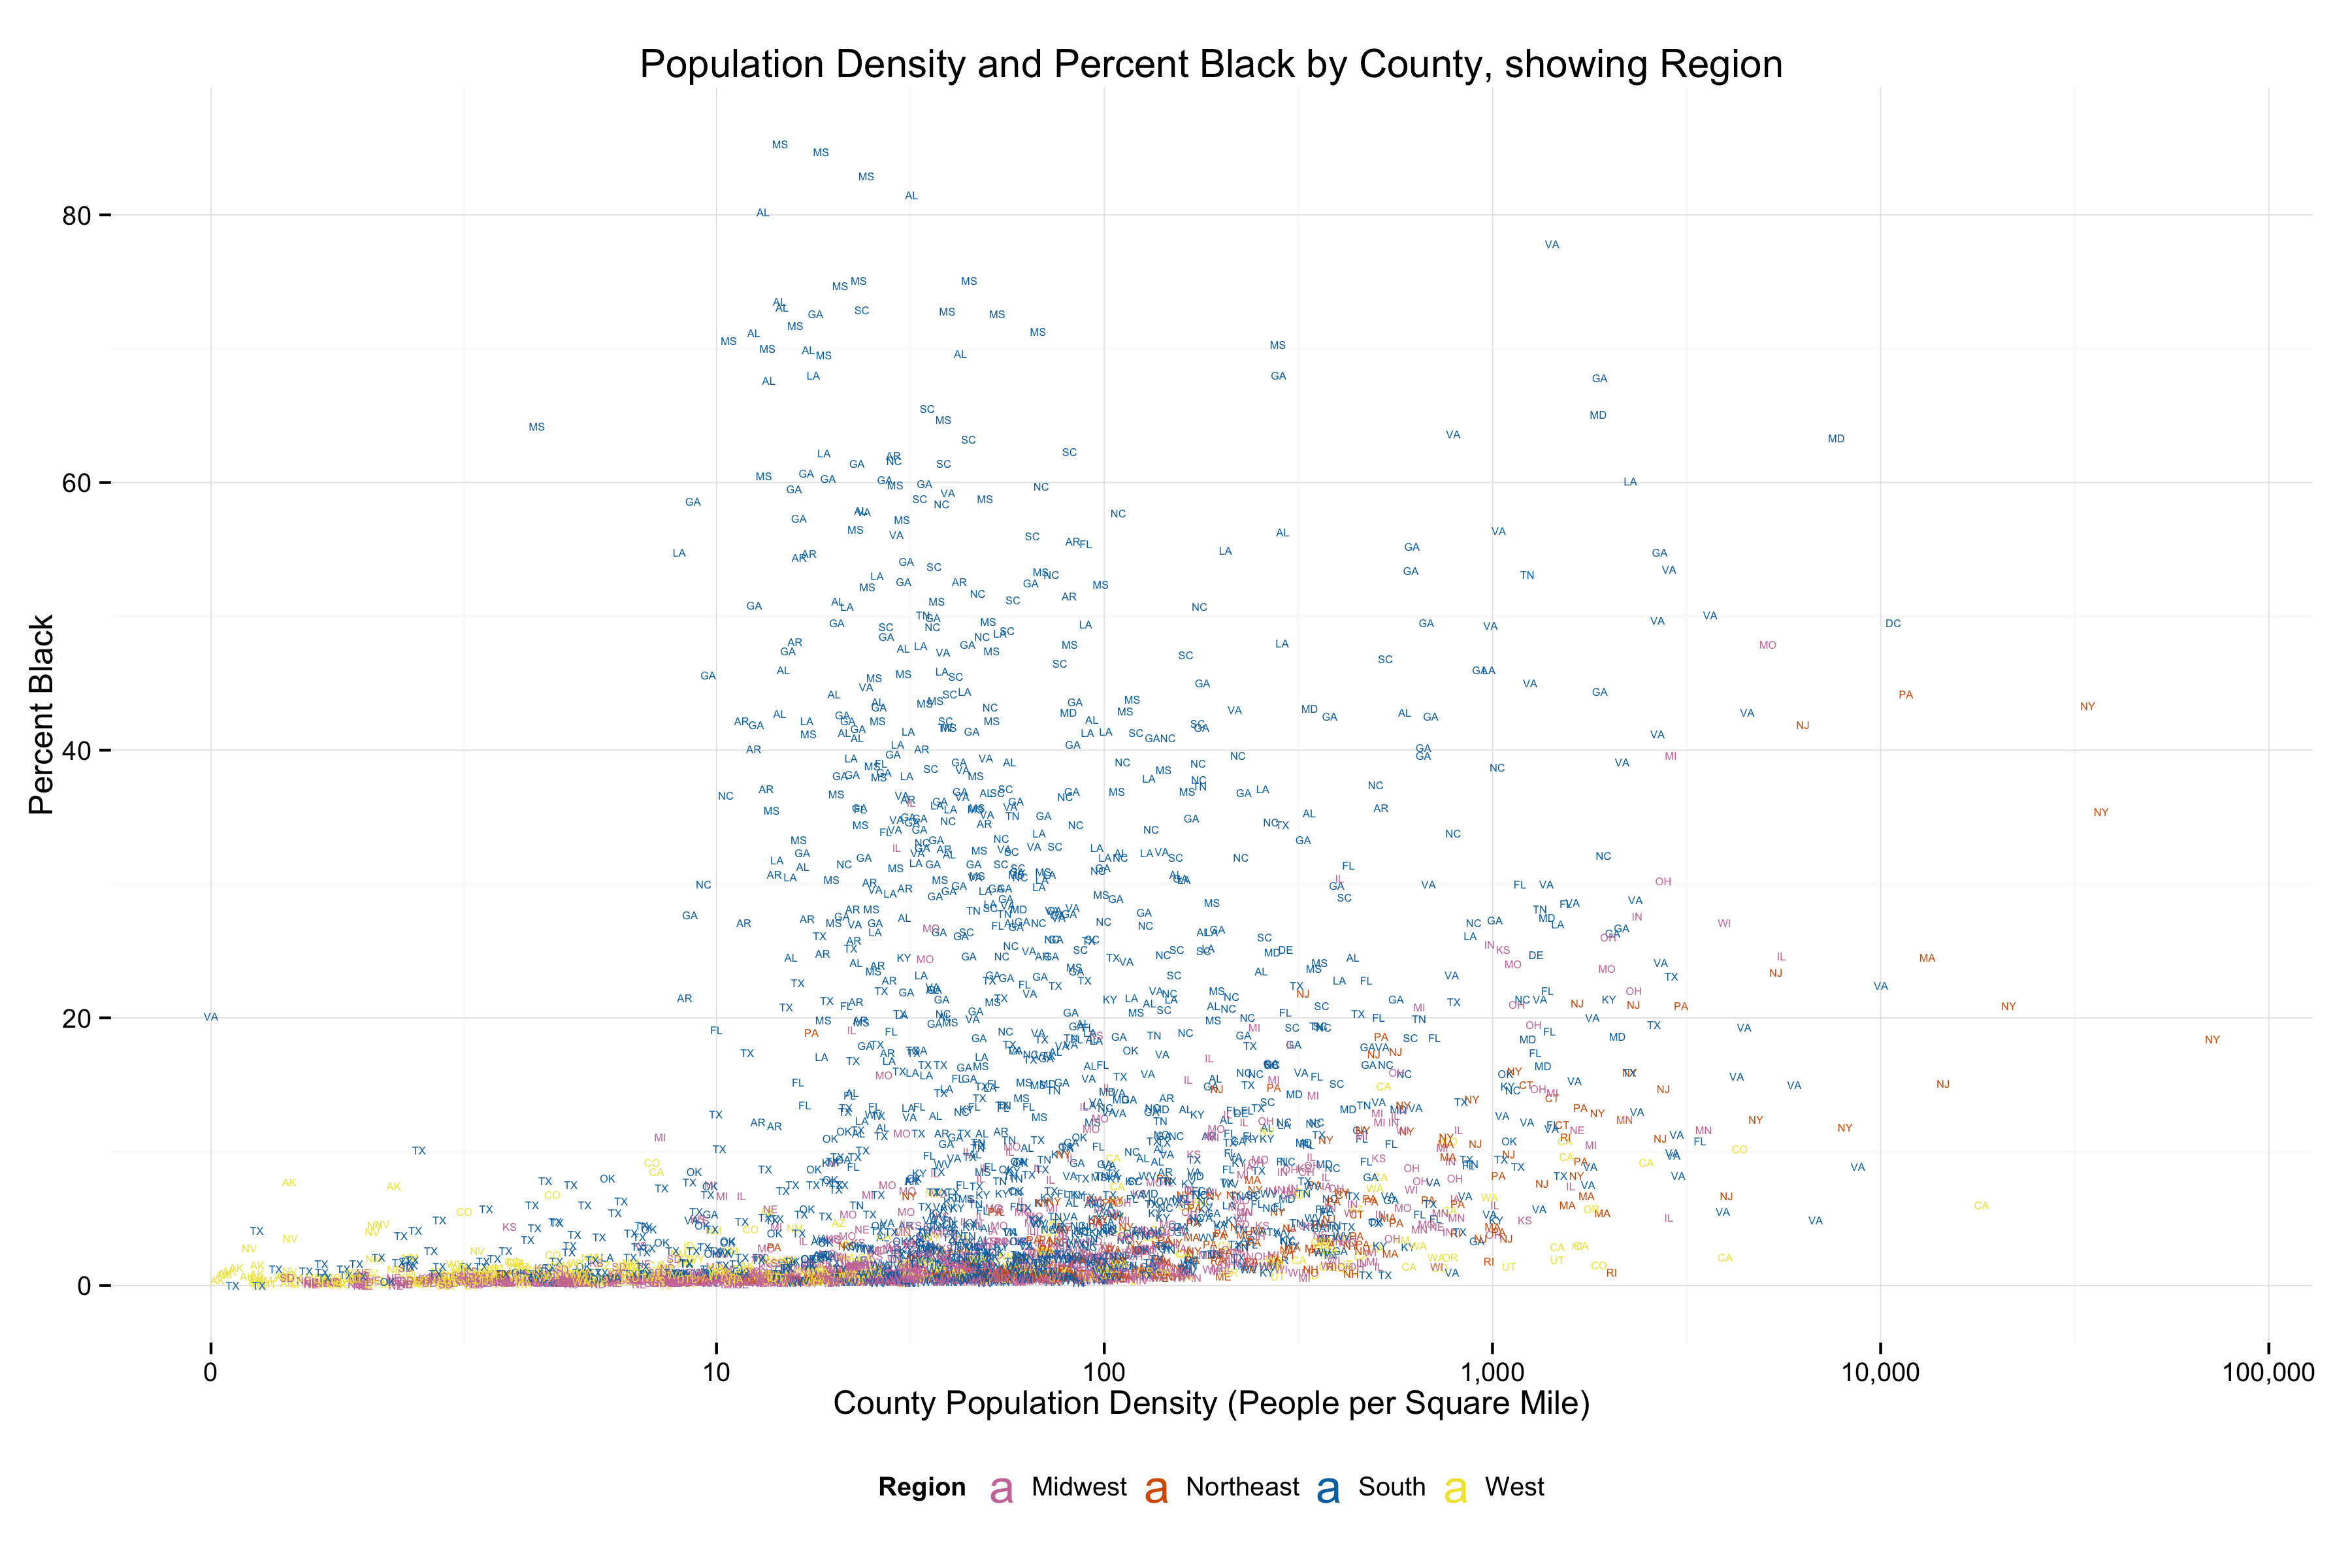 Population Density vs Percent Black Population, by county.